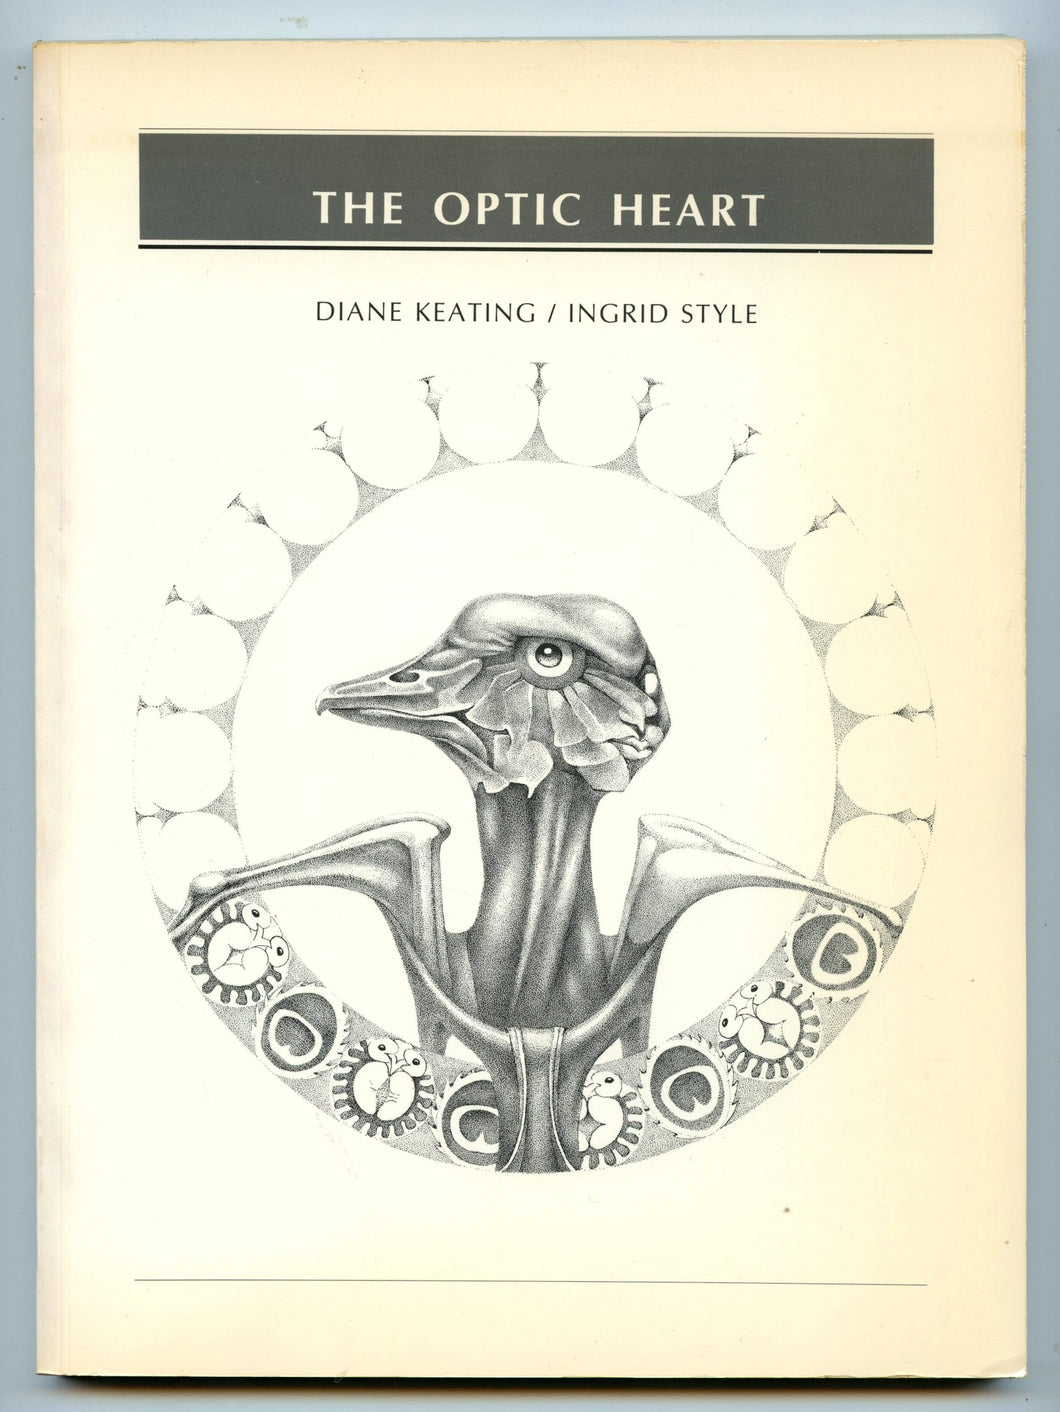 The Optic Heart